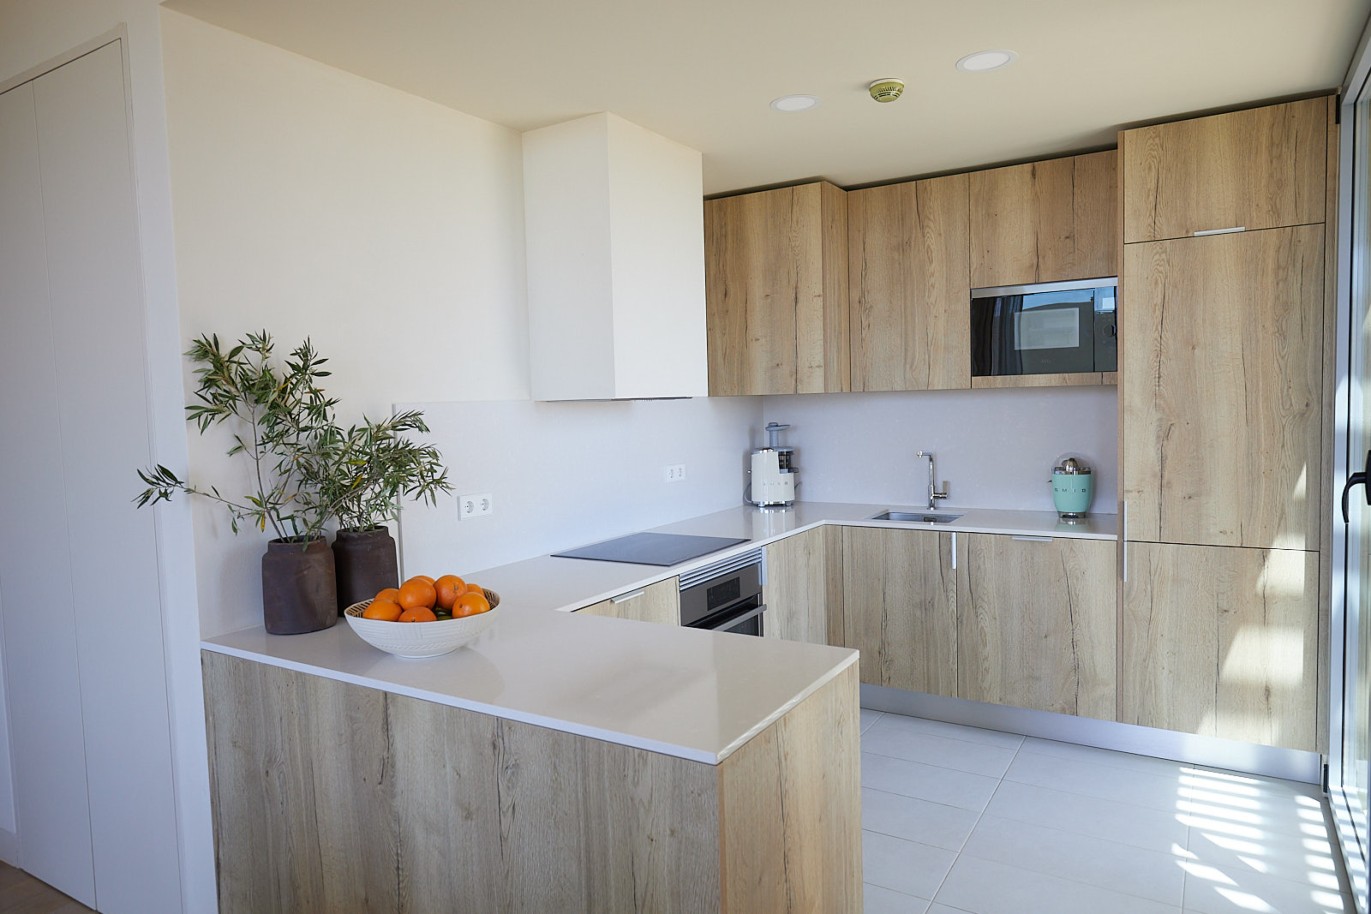 2 bedroom apartment in resort, for sale in Porches, Algarve_230558